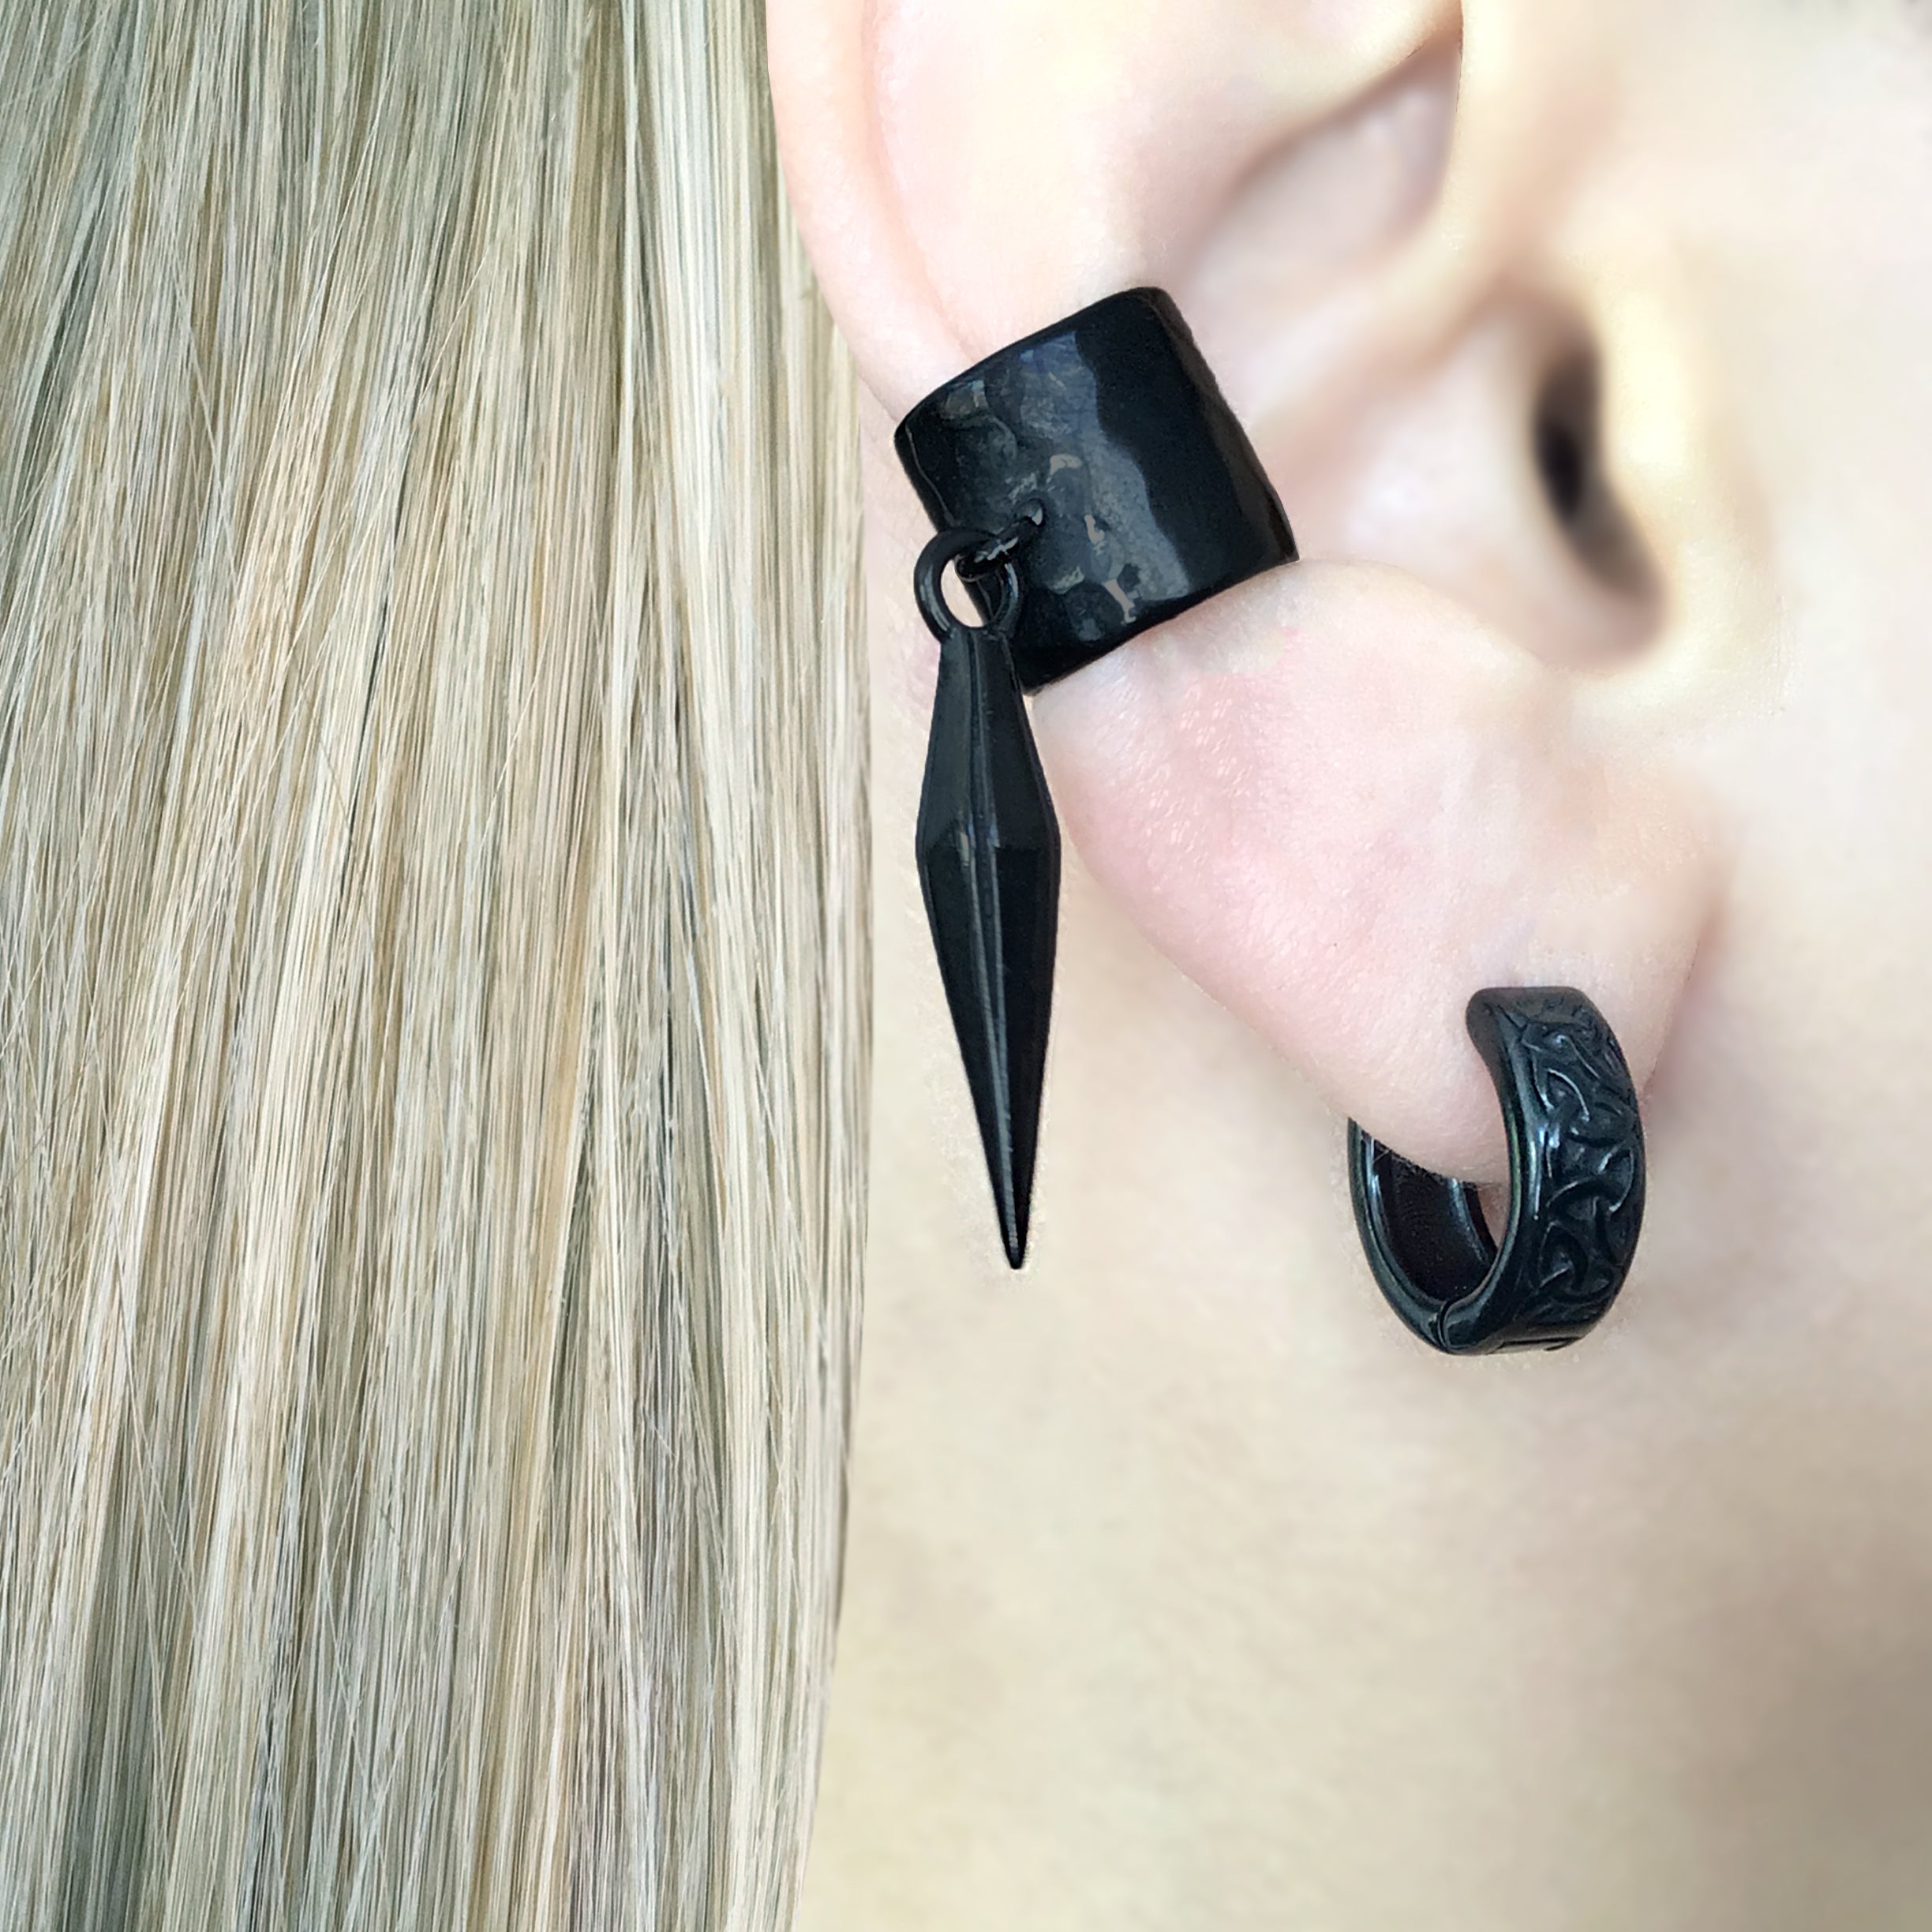 EAR CUFF WITH SPIKE IN BLACK